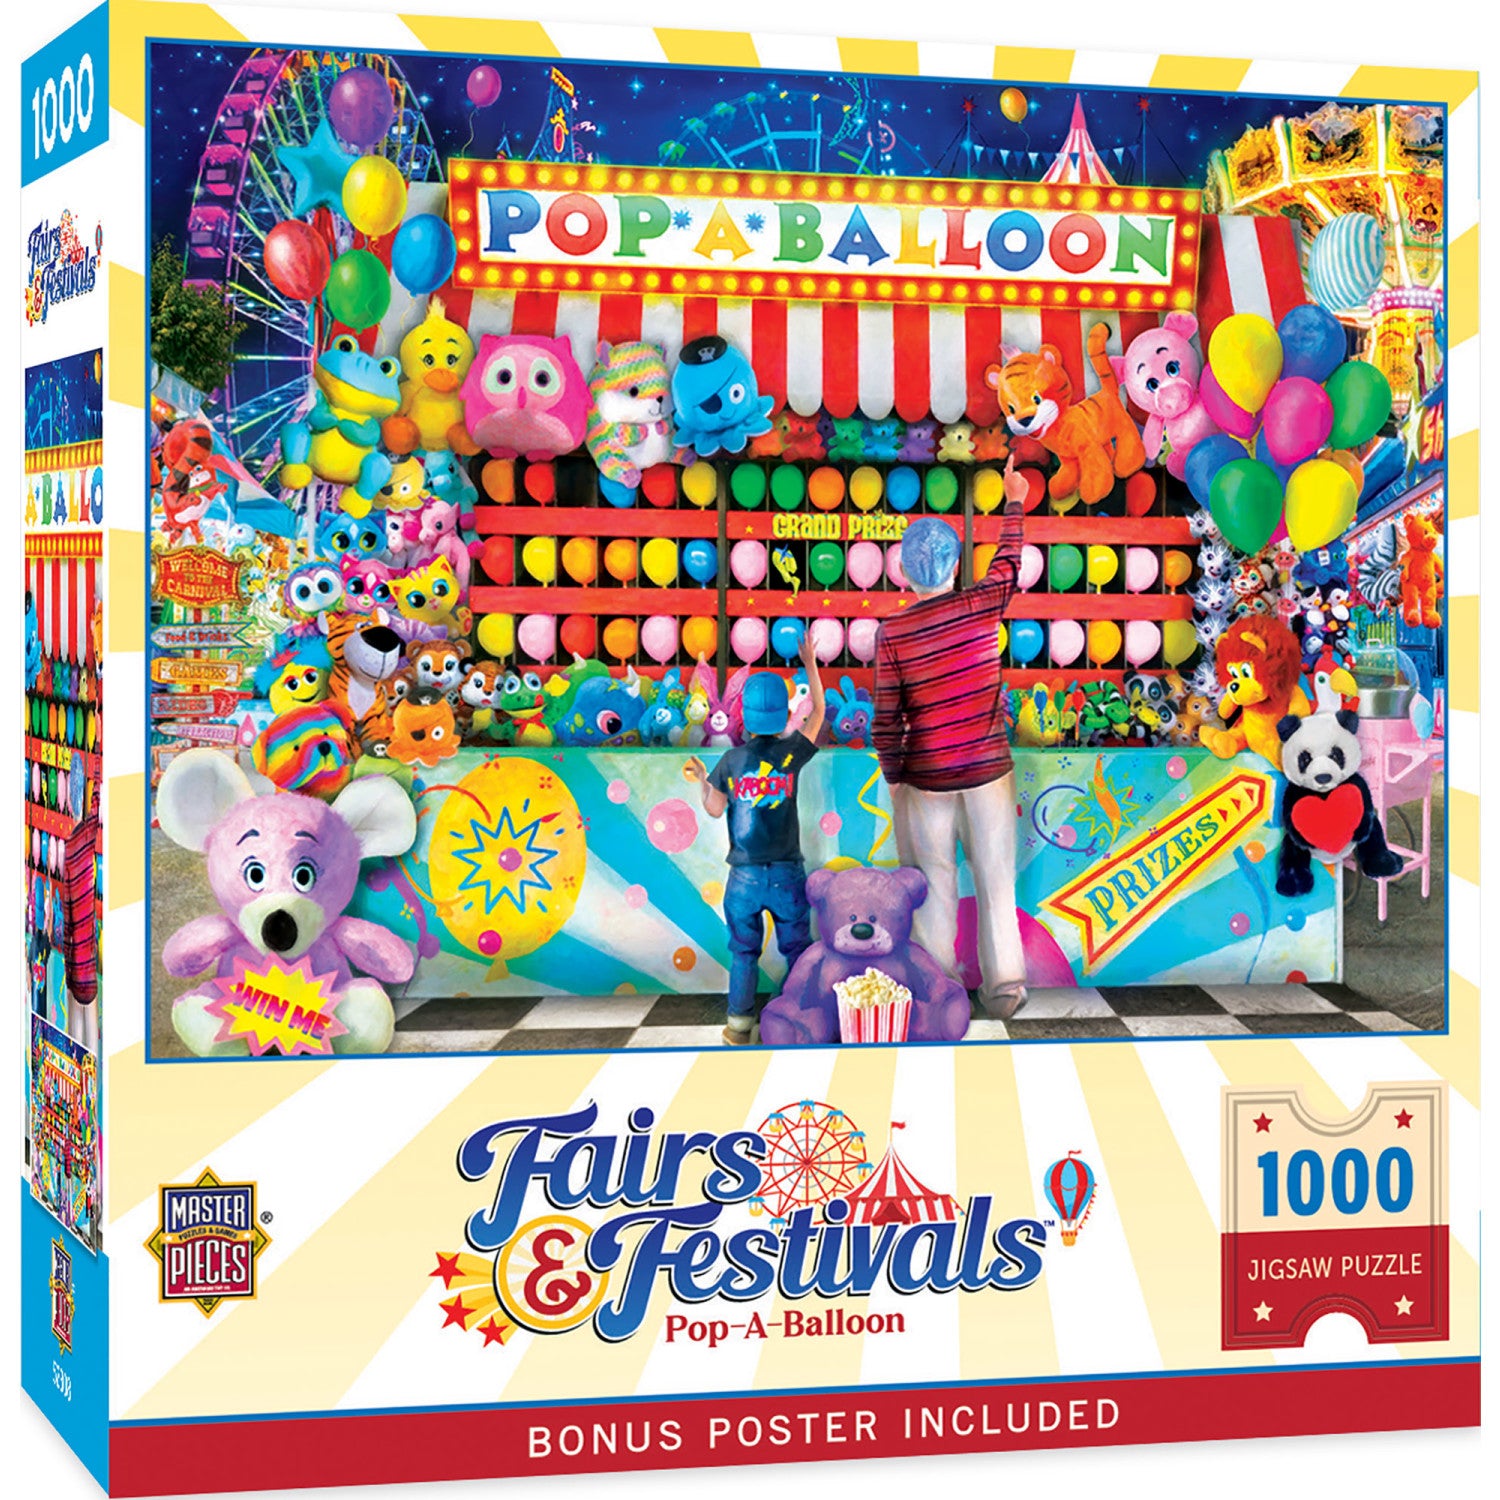 Fairs & Festivals - Pop-A-Balloon 1000 Piece Jigsaw Puzzle